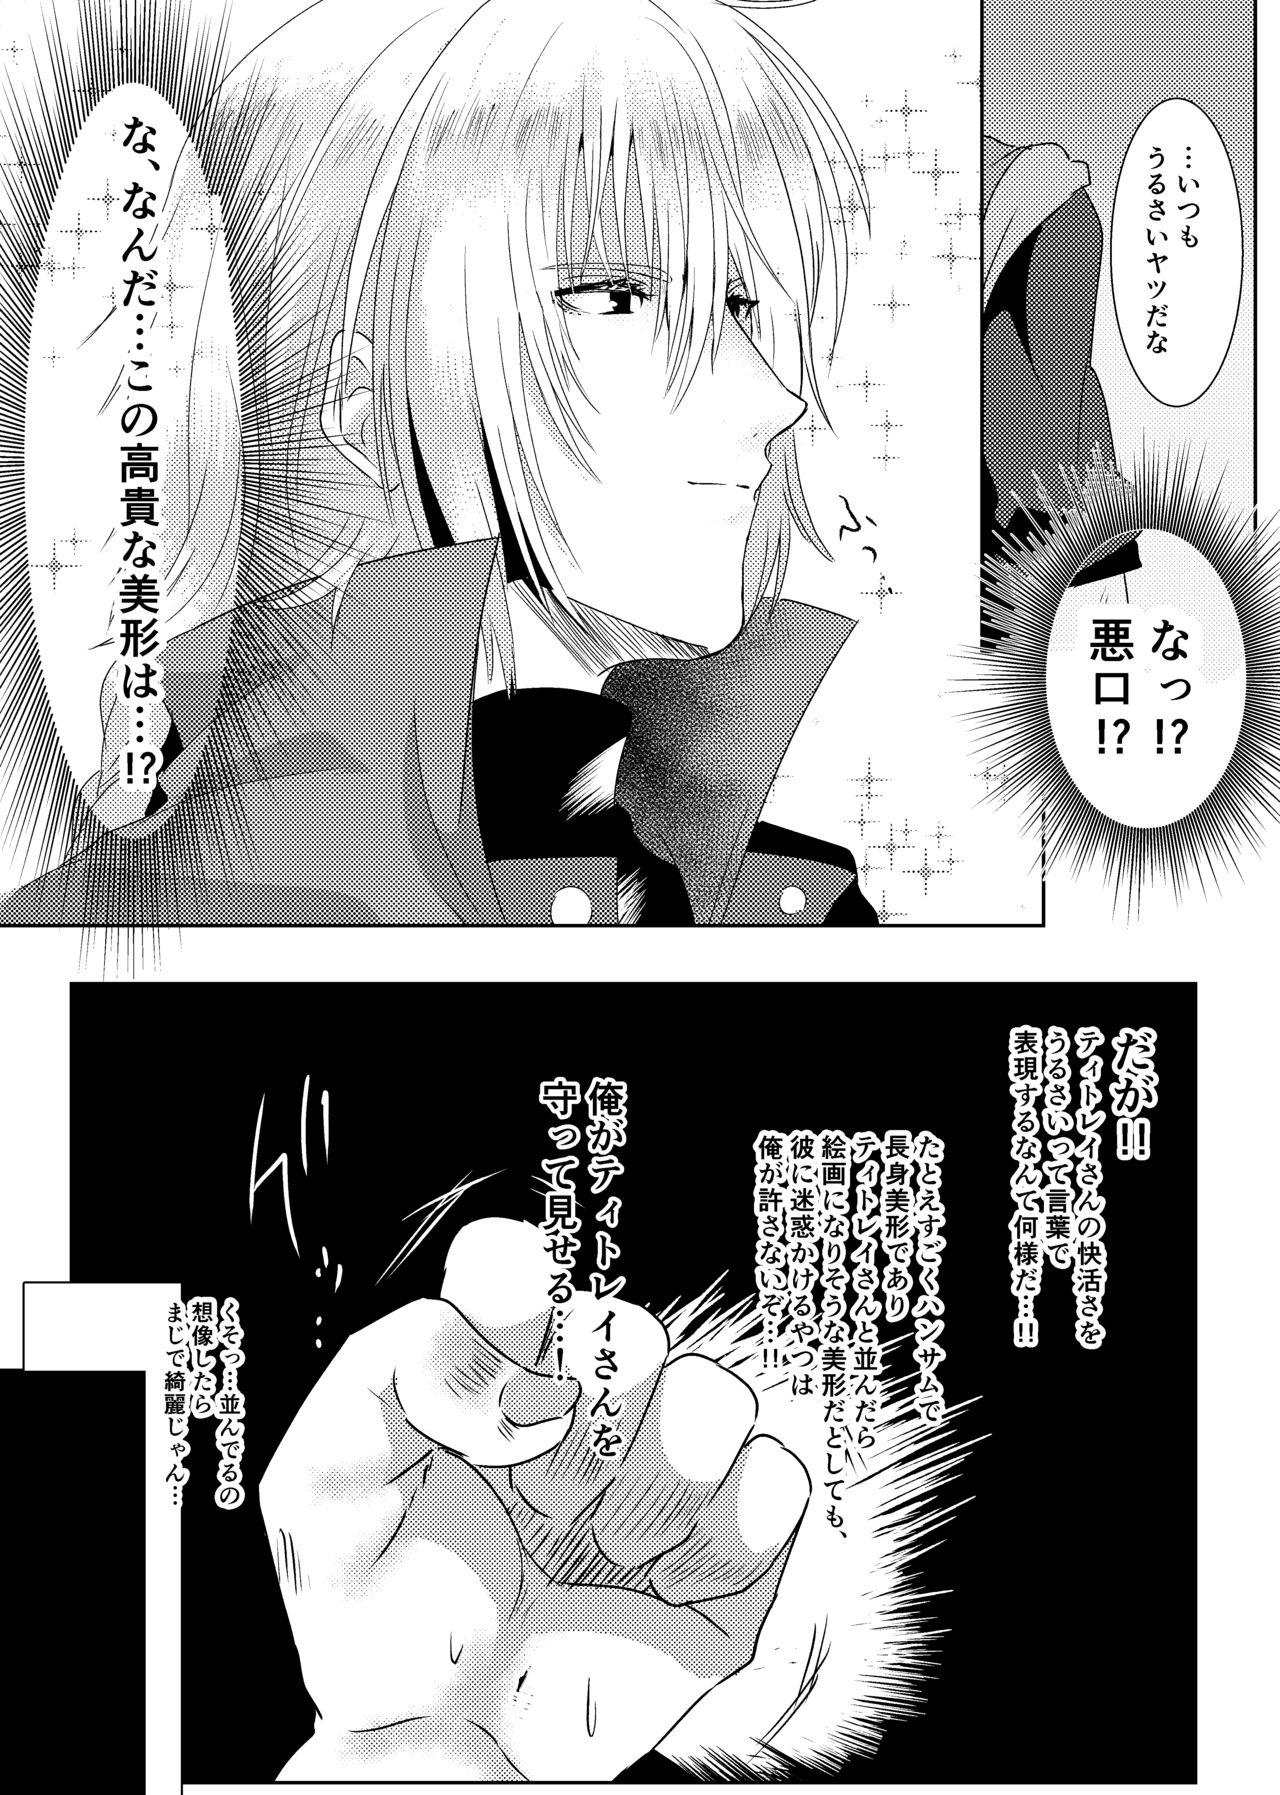 Facebook Titorei Ni Koisuru Ore Manga - Tales of rebirth Sola - Page 4